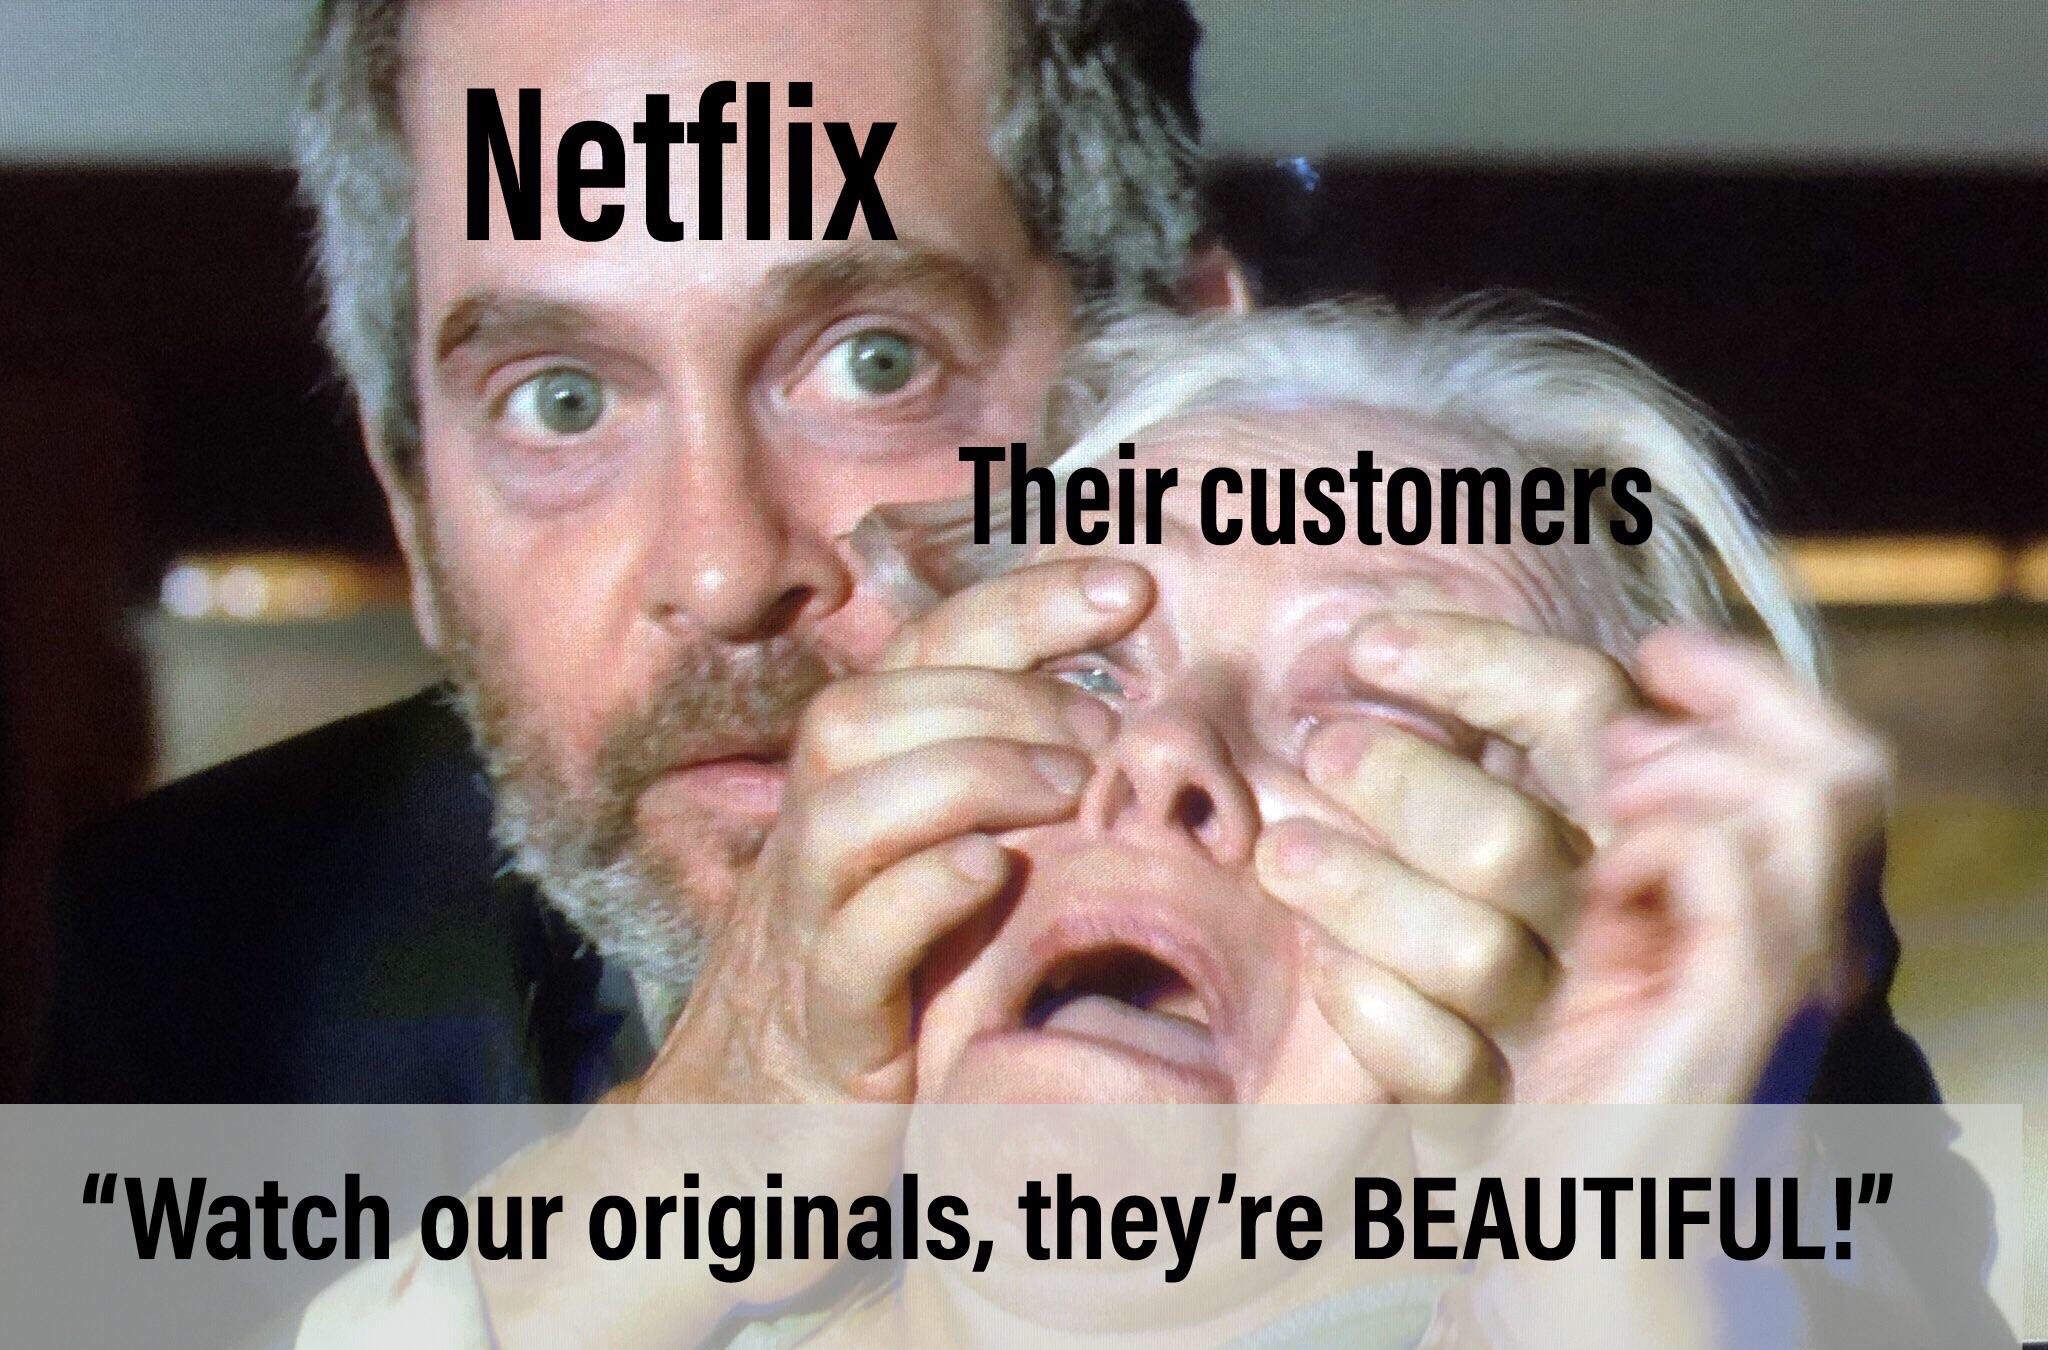 bird box meme template - Netflix Their customers "Watch our originals, they're Beautiful!"